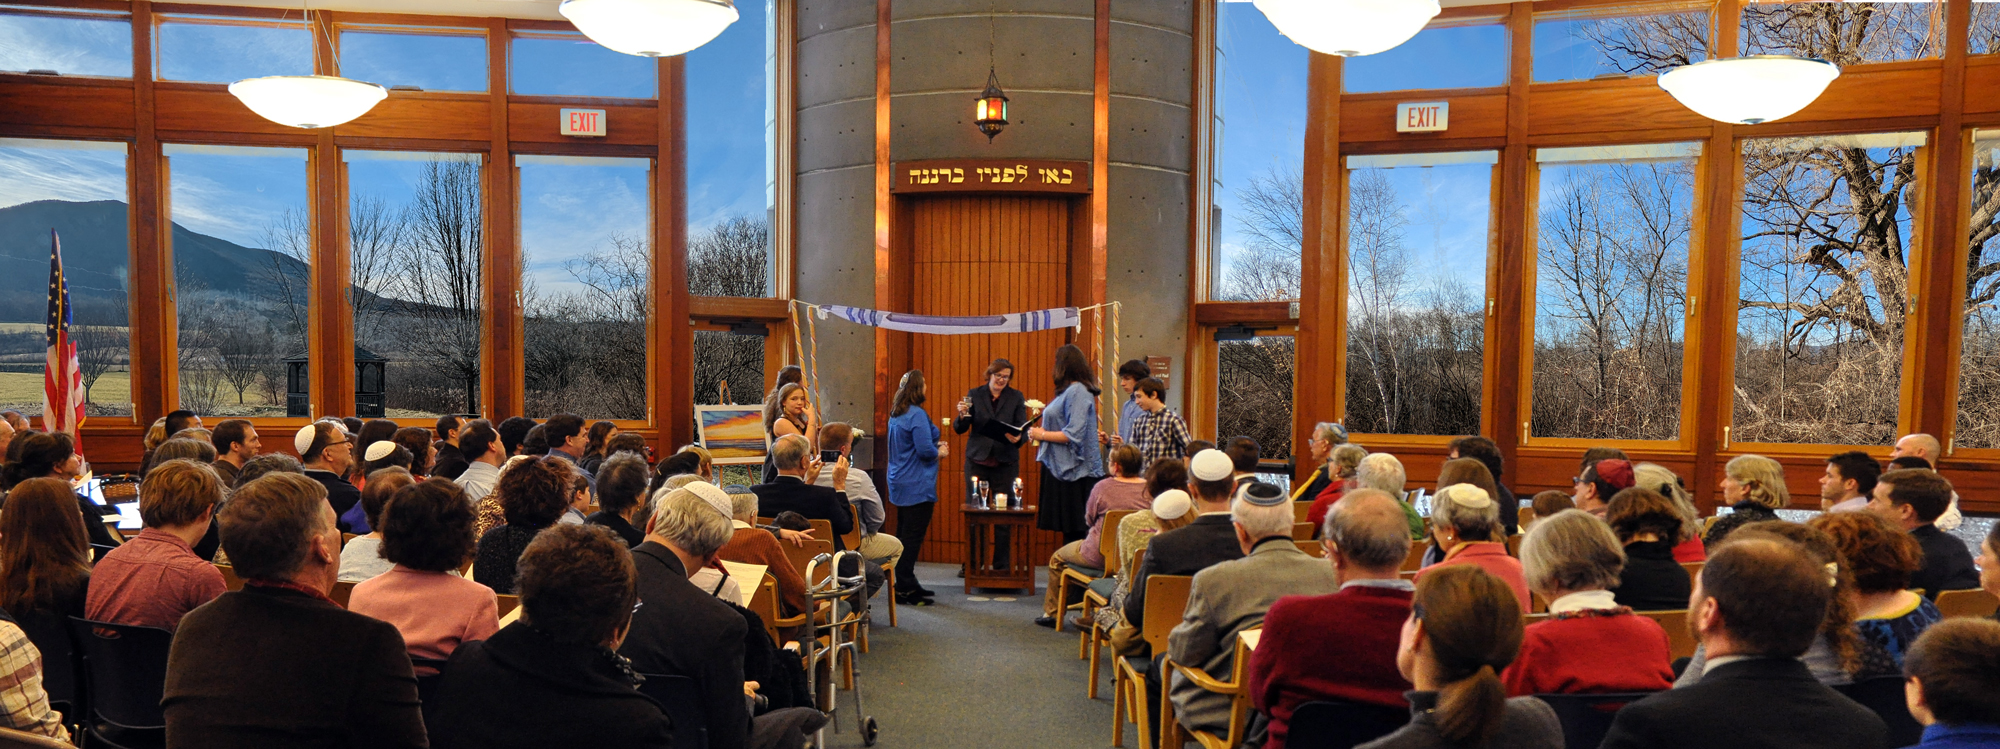 Sanctuary at Congregation Beth Israel North Adams Berkshires Massachusetts